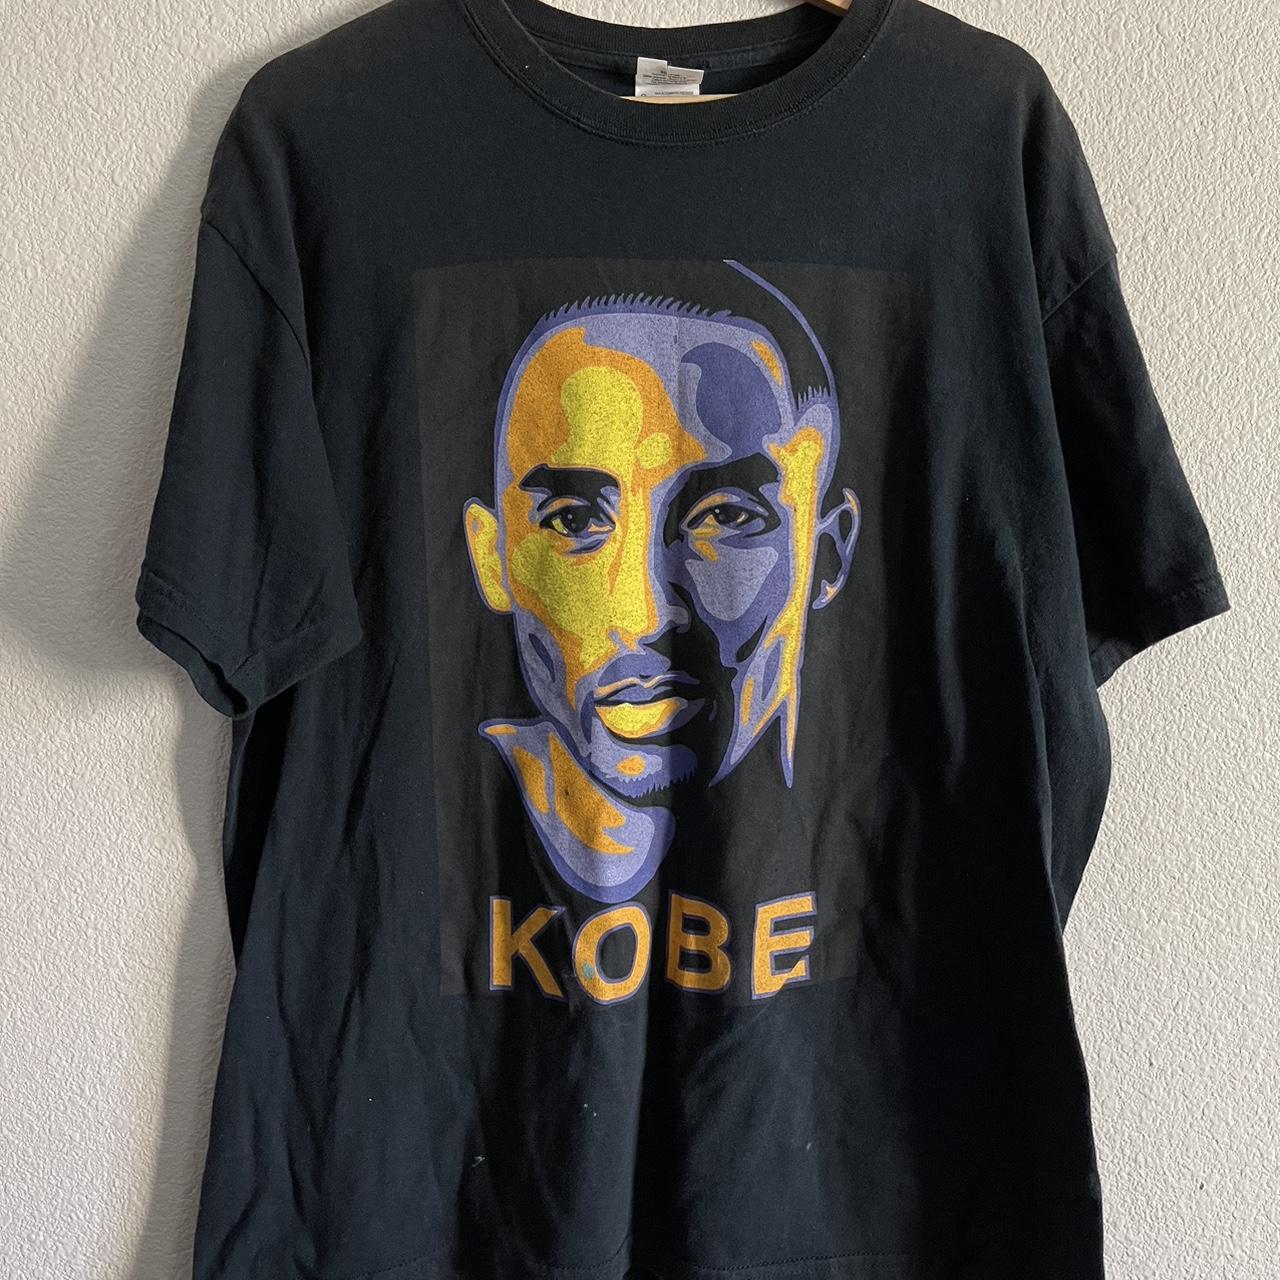 Kobe bryant 90s style vintage tee t-shirt